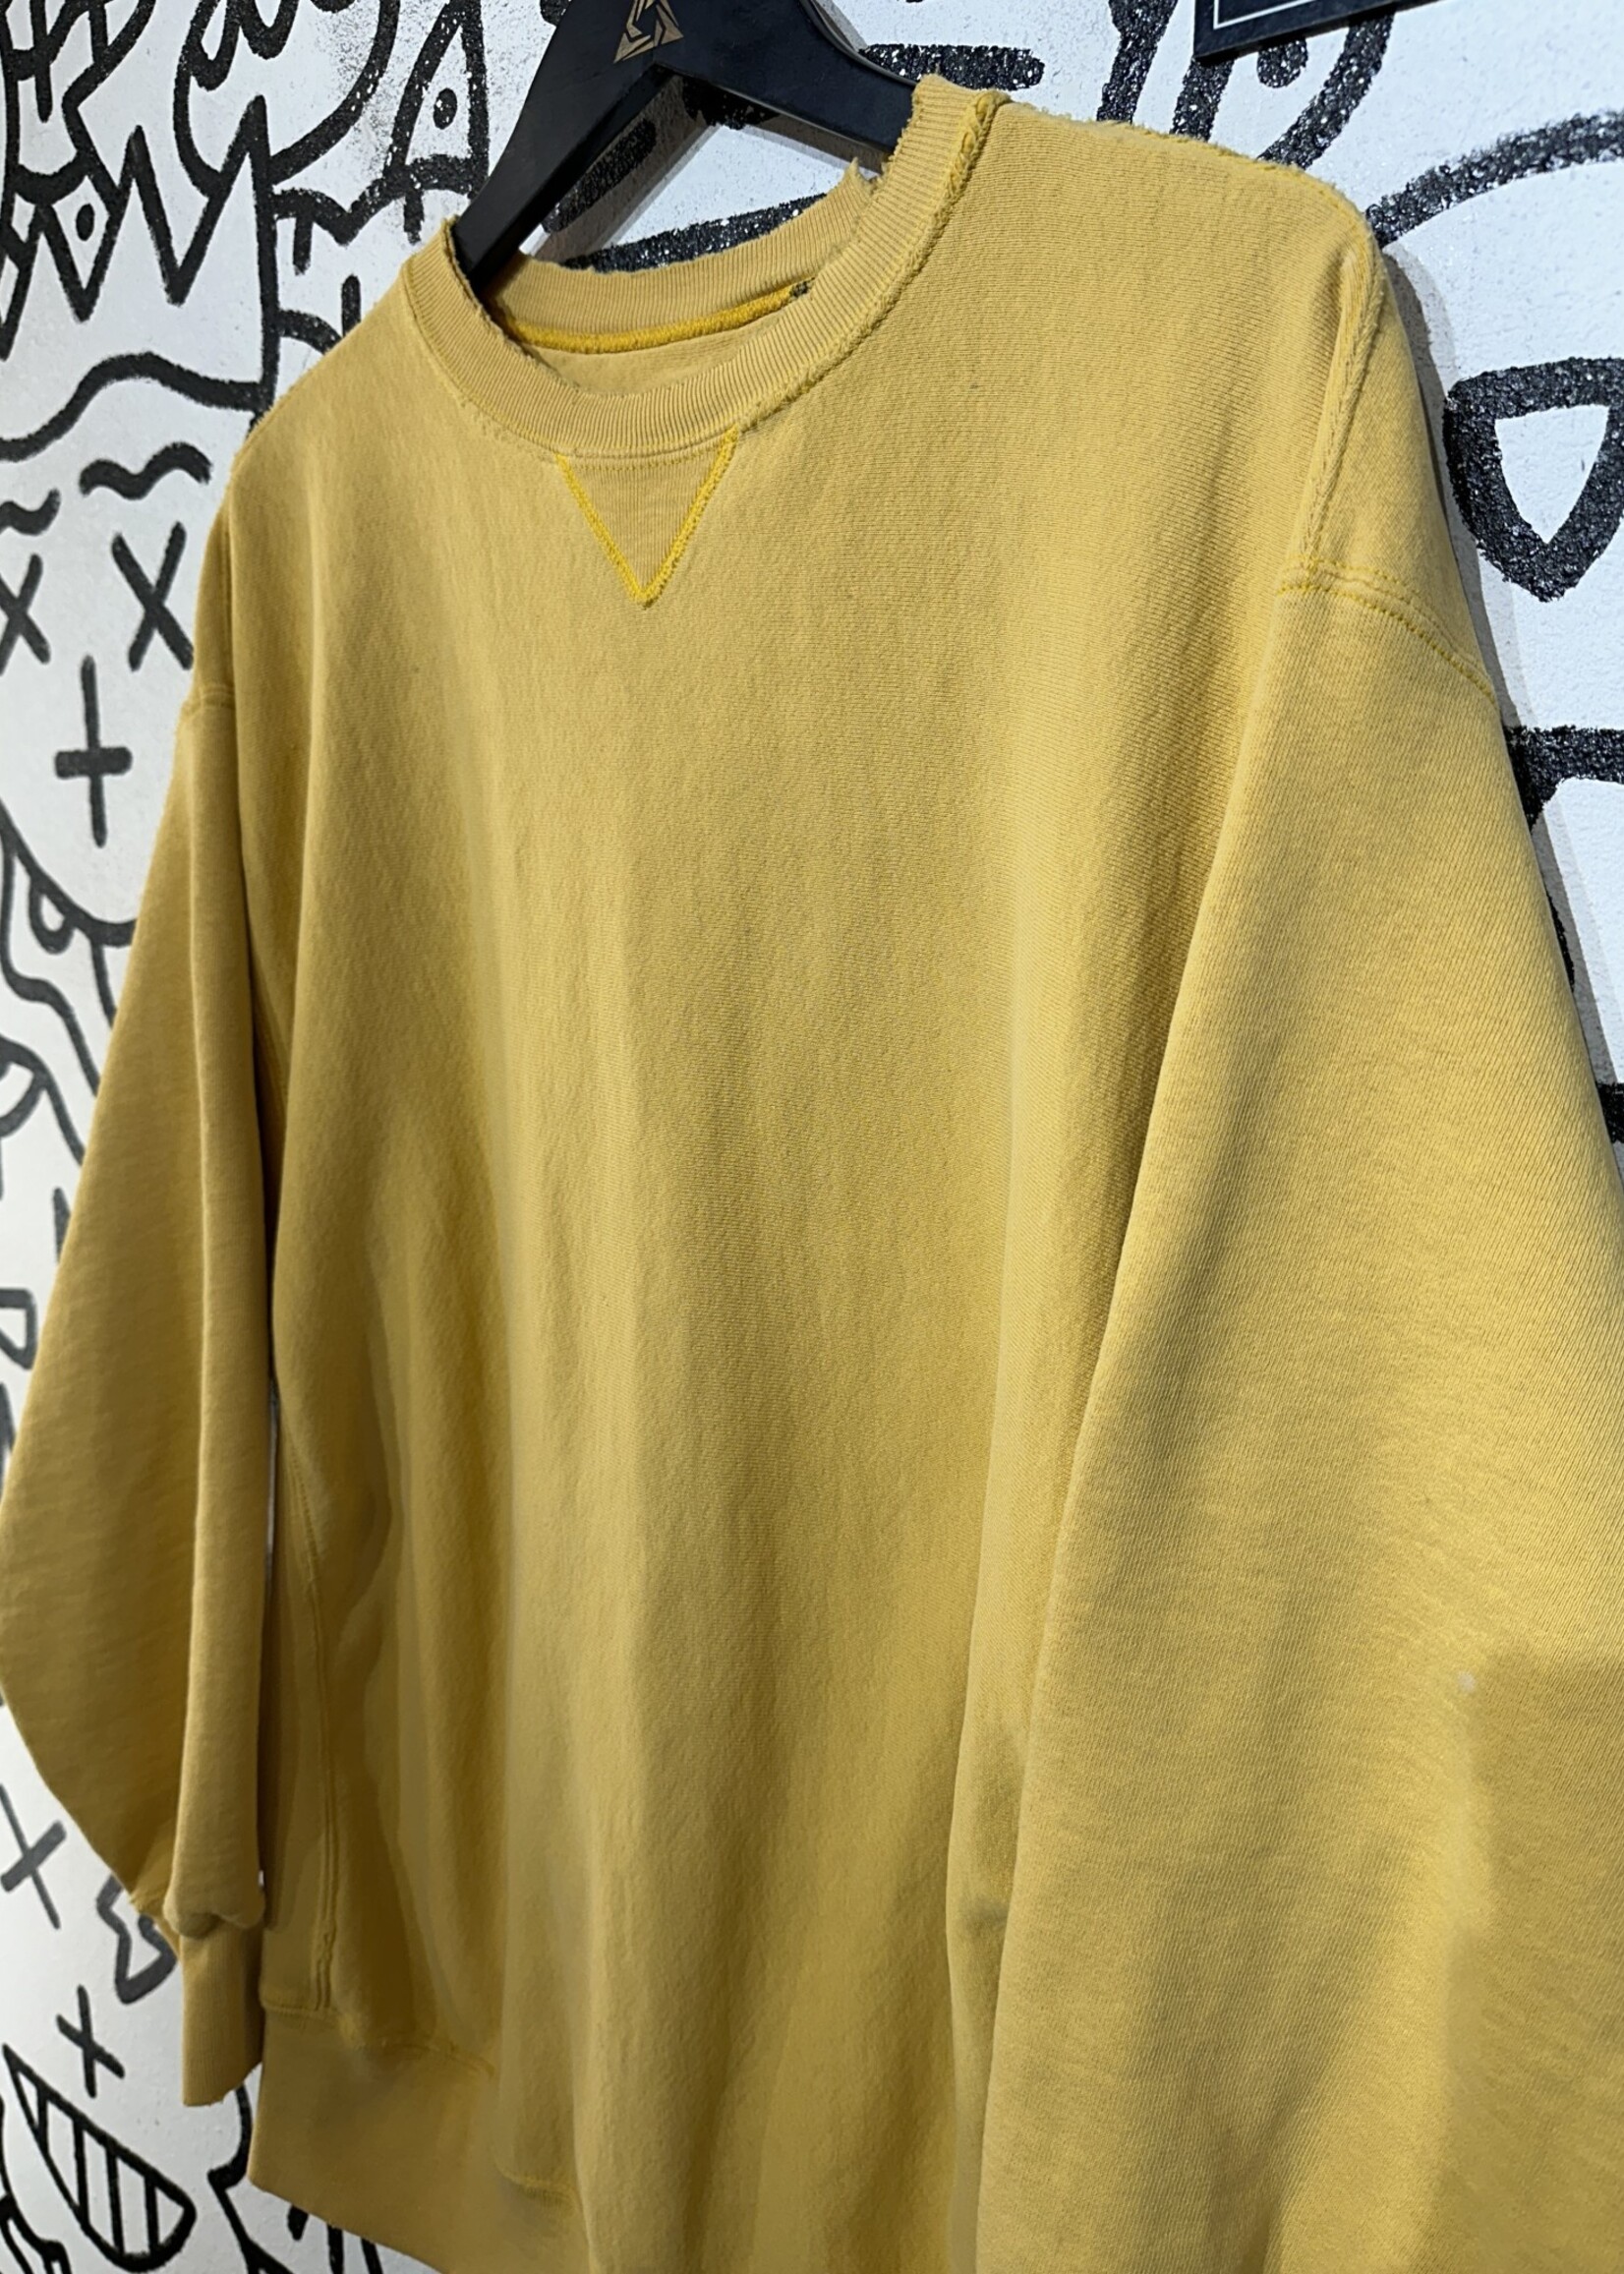 Gap Vintage Yellow Sweater L